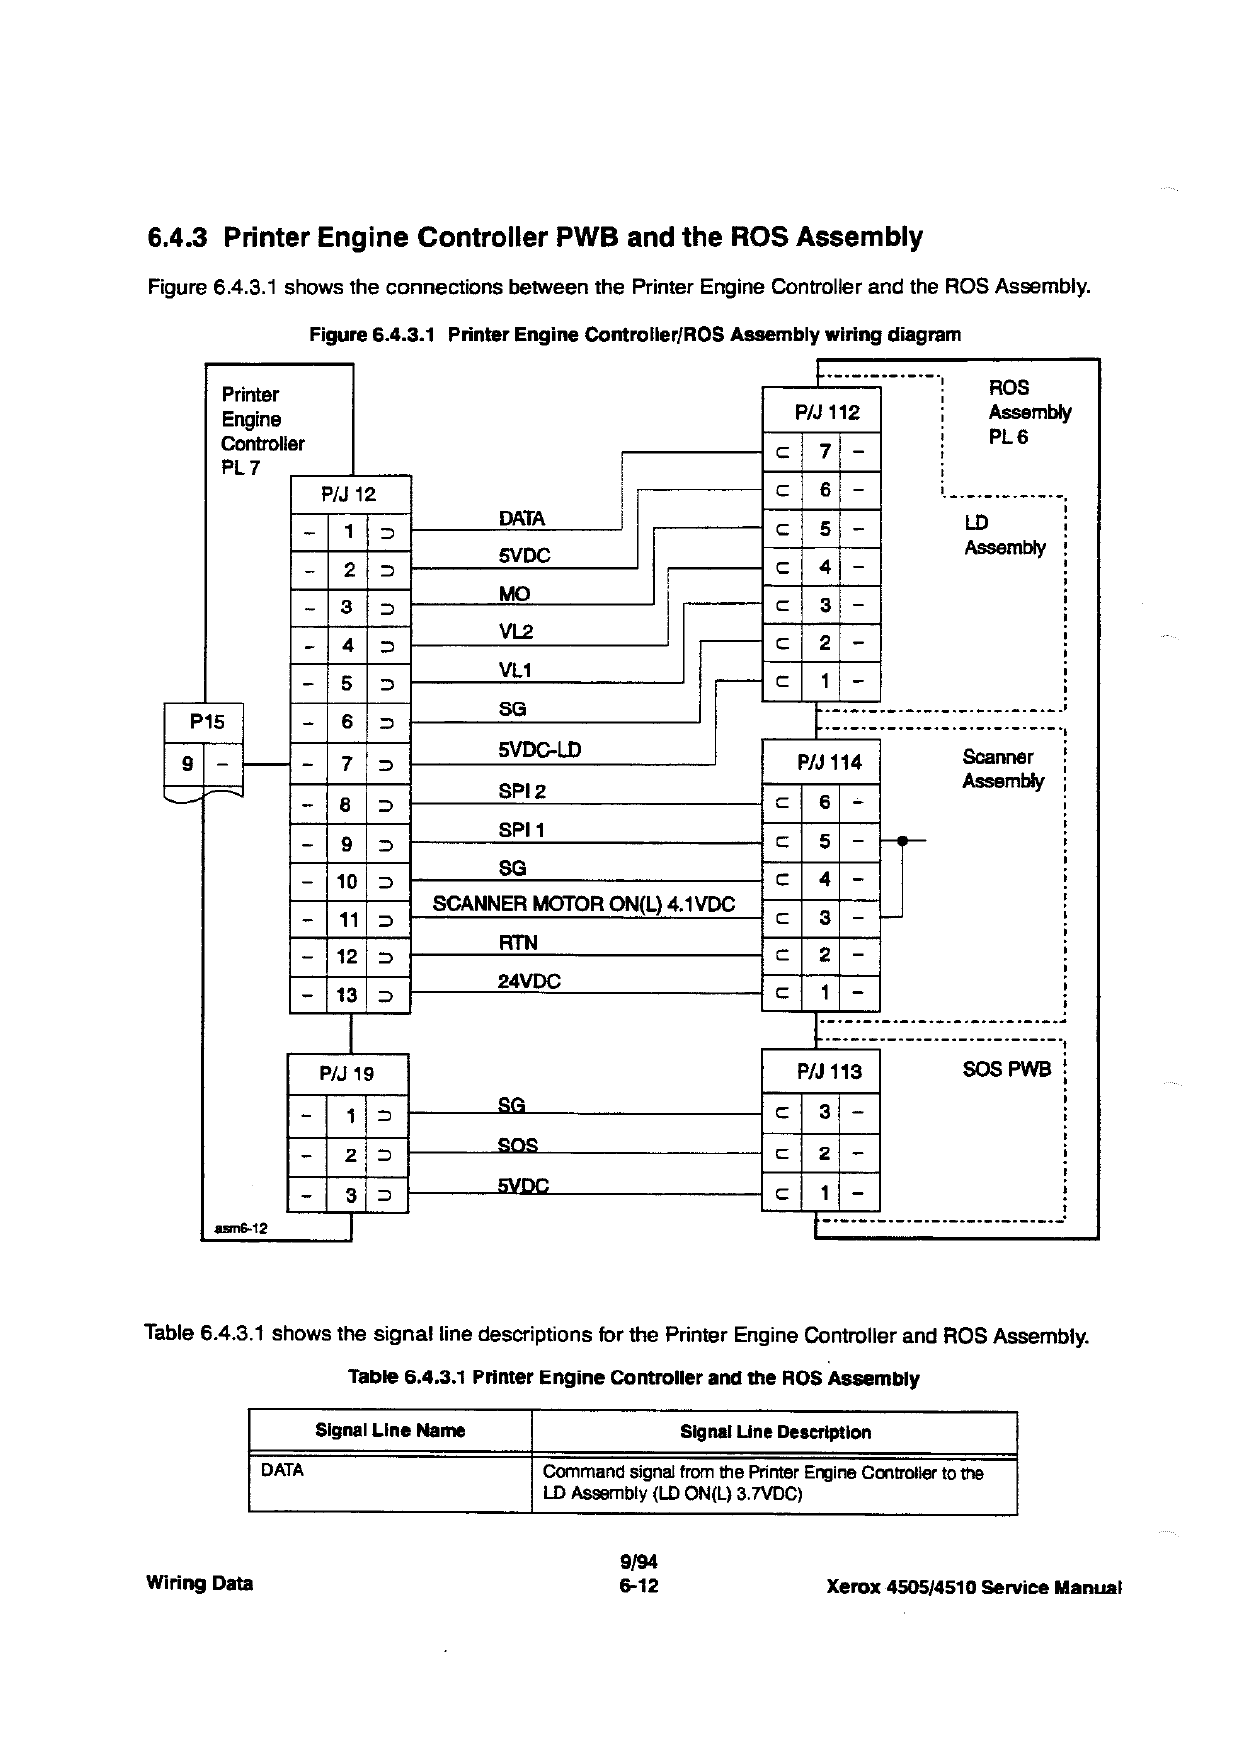 Xerox DocuPrint 4505 4510 Parts List and Service Manual-5